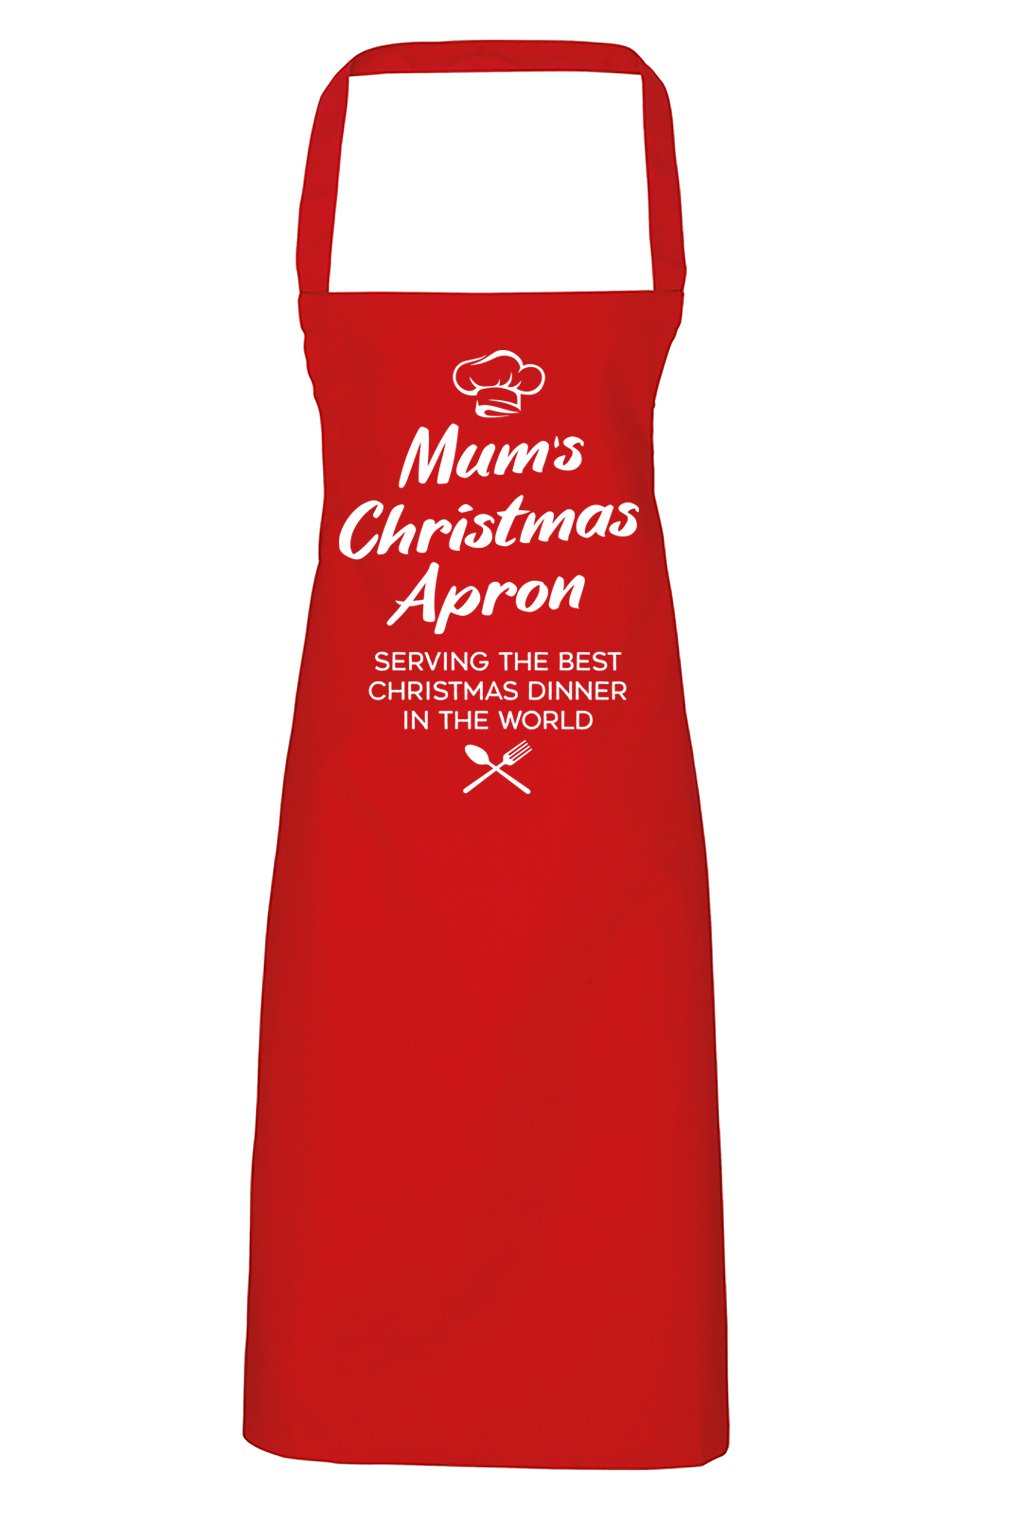 Mum's Christmas Apron - Womens Apron